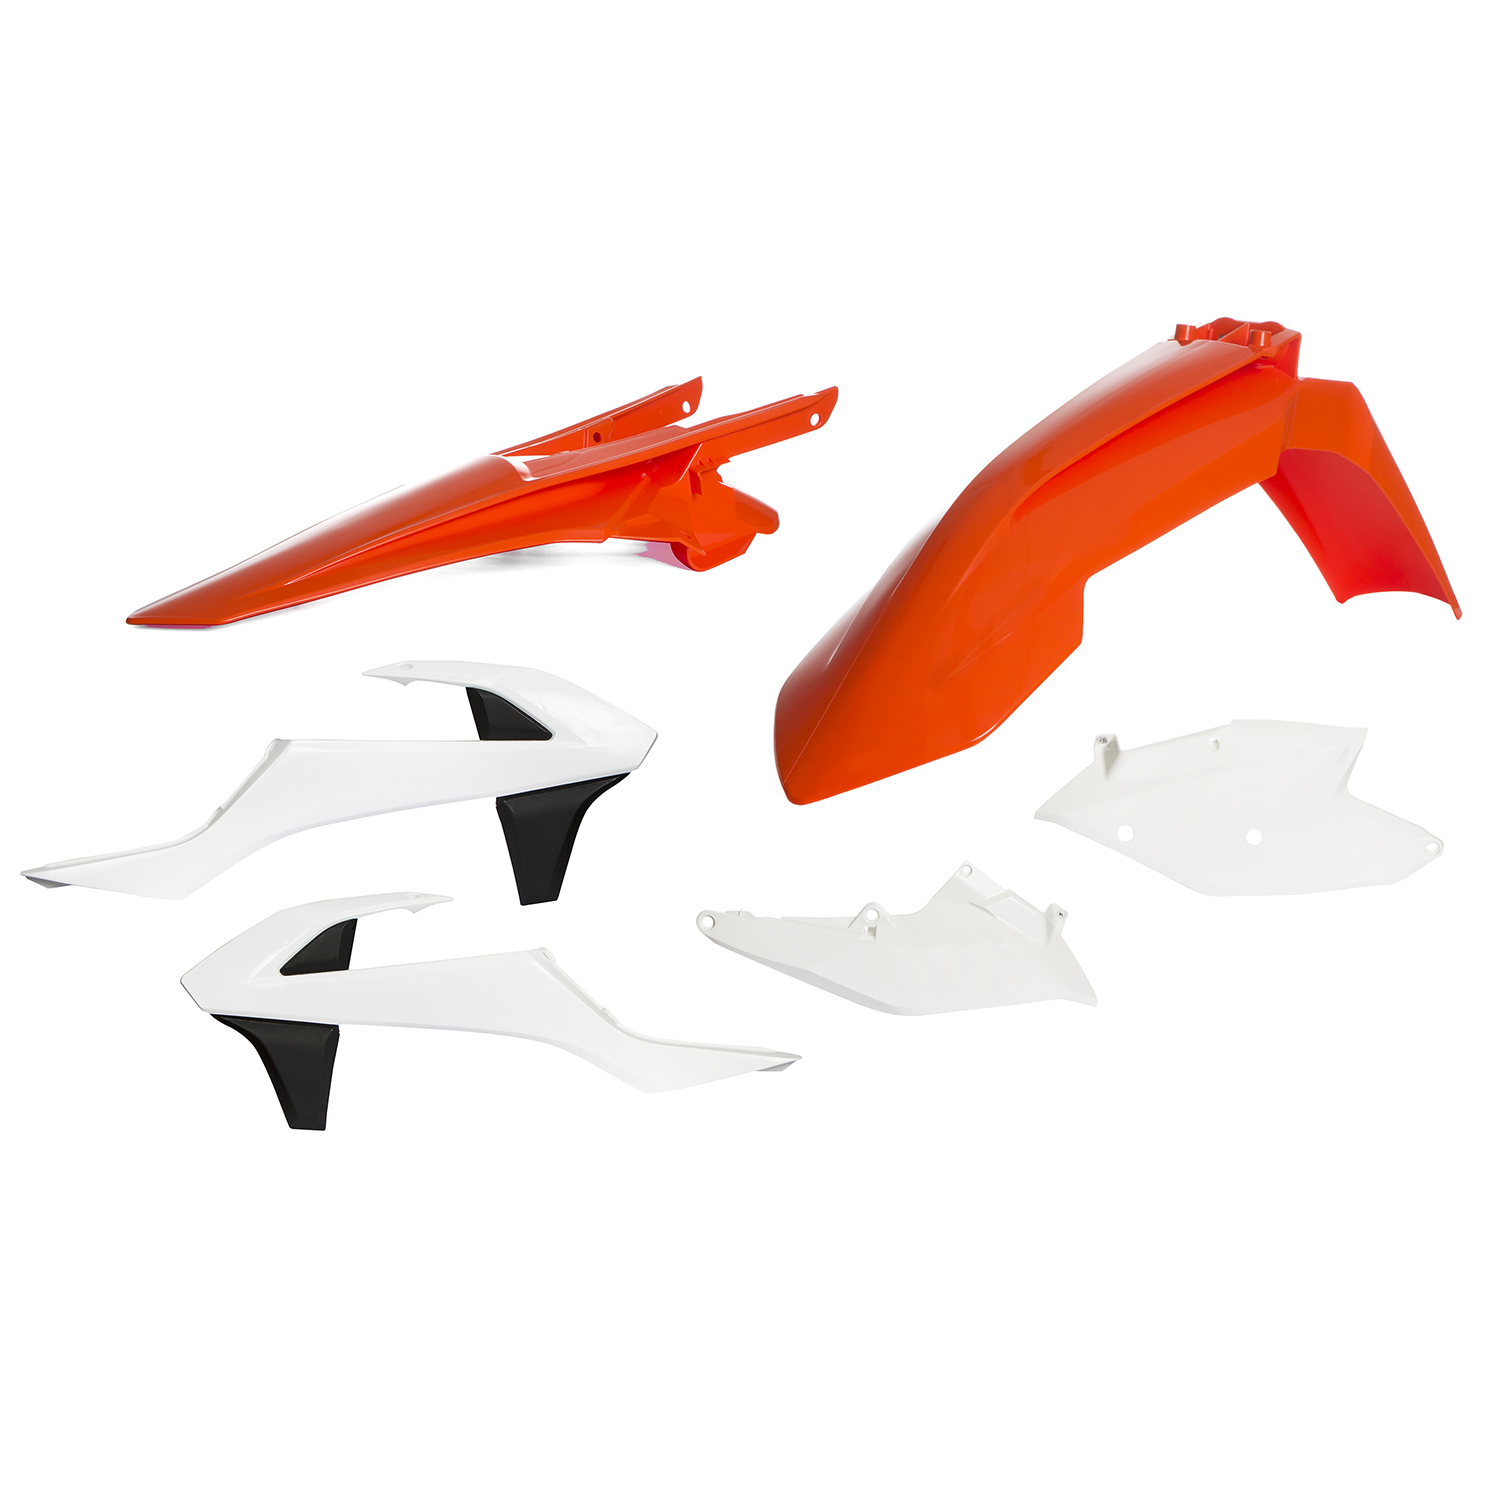 Acerbis Kit Plastiche  KTM SX/SX-F 16-18, Arancione 17